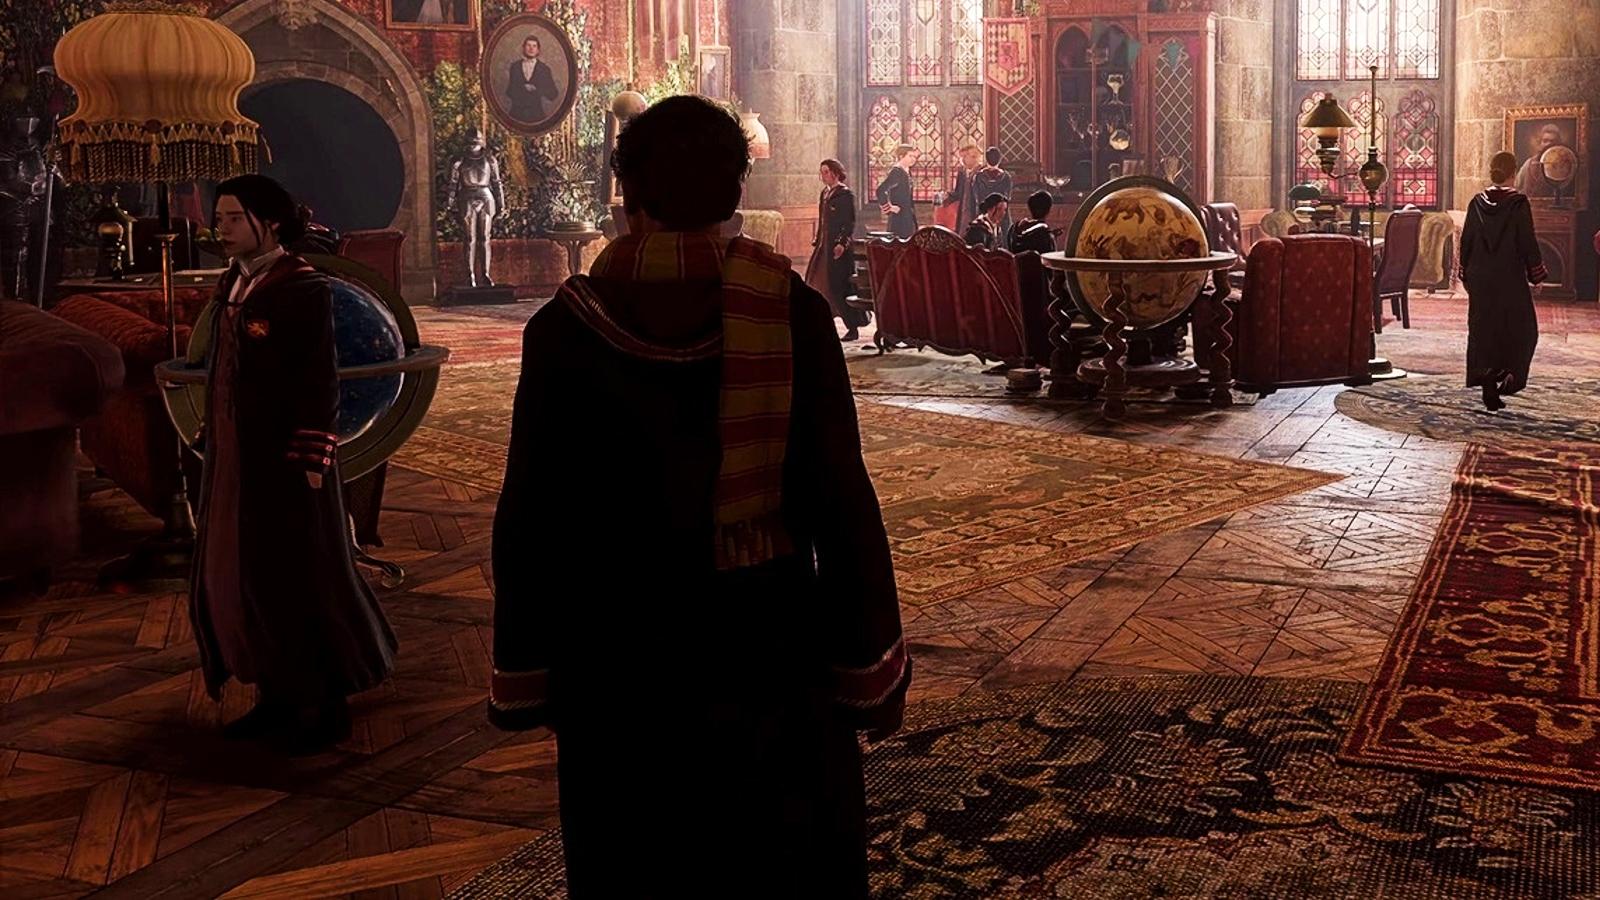 Gryffindor Common Room in Hogwarts Legacy